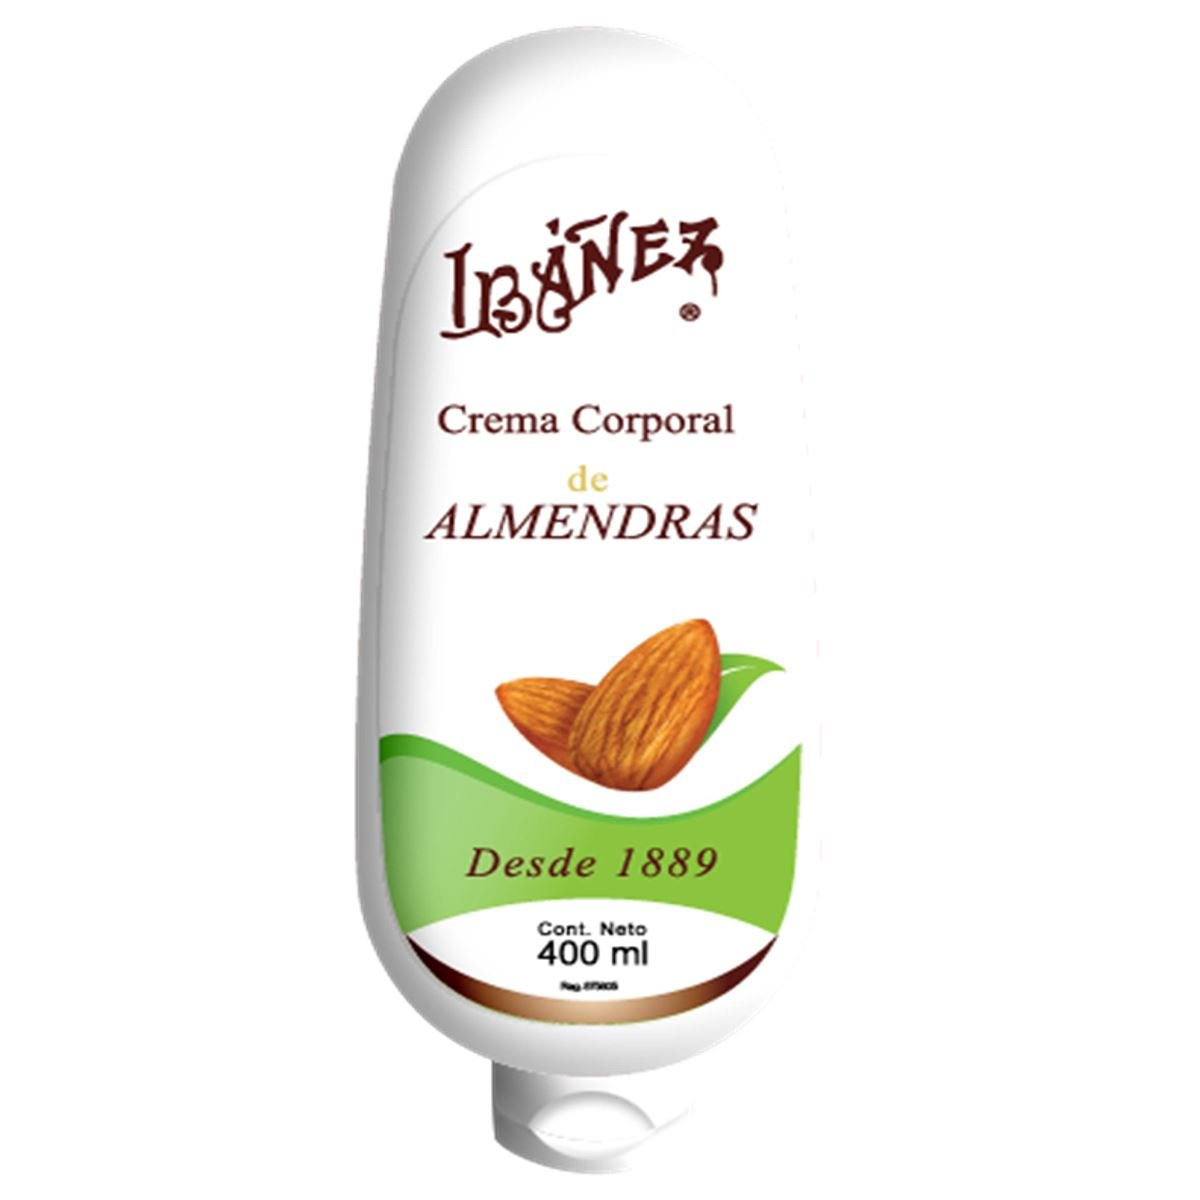 Crema de Almendras 400 ml Ibañez